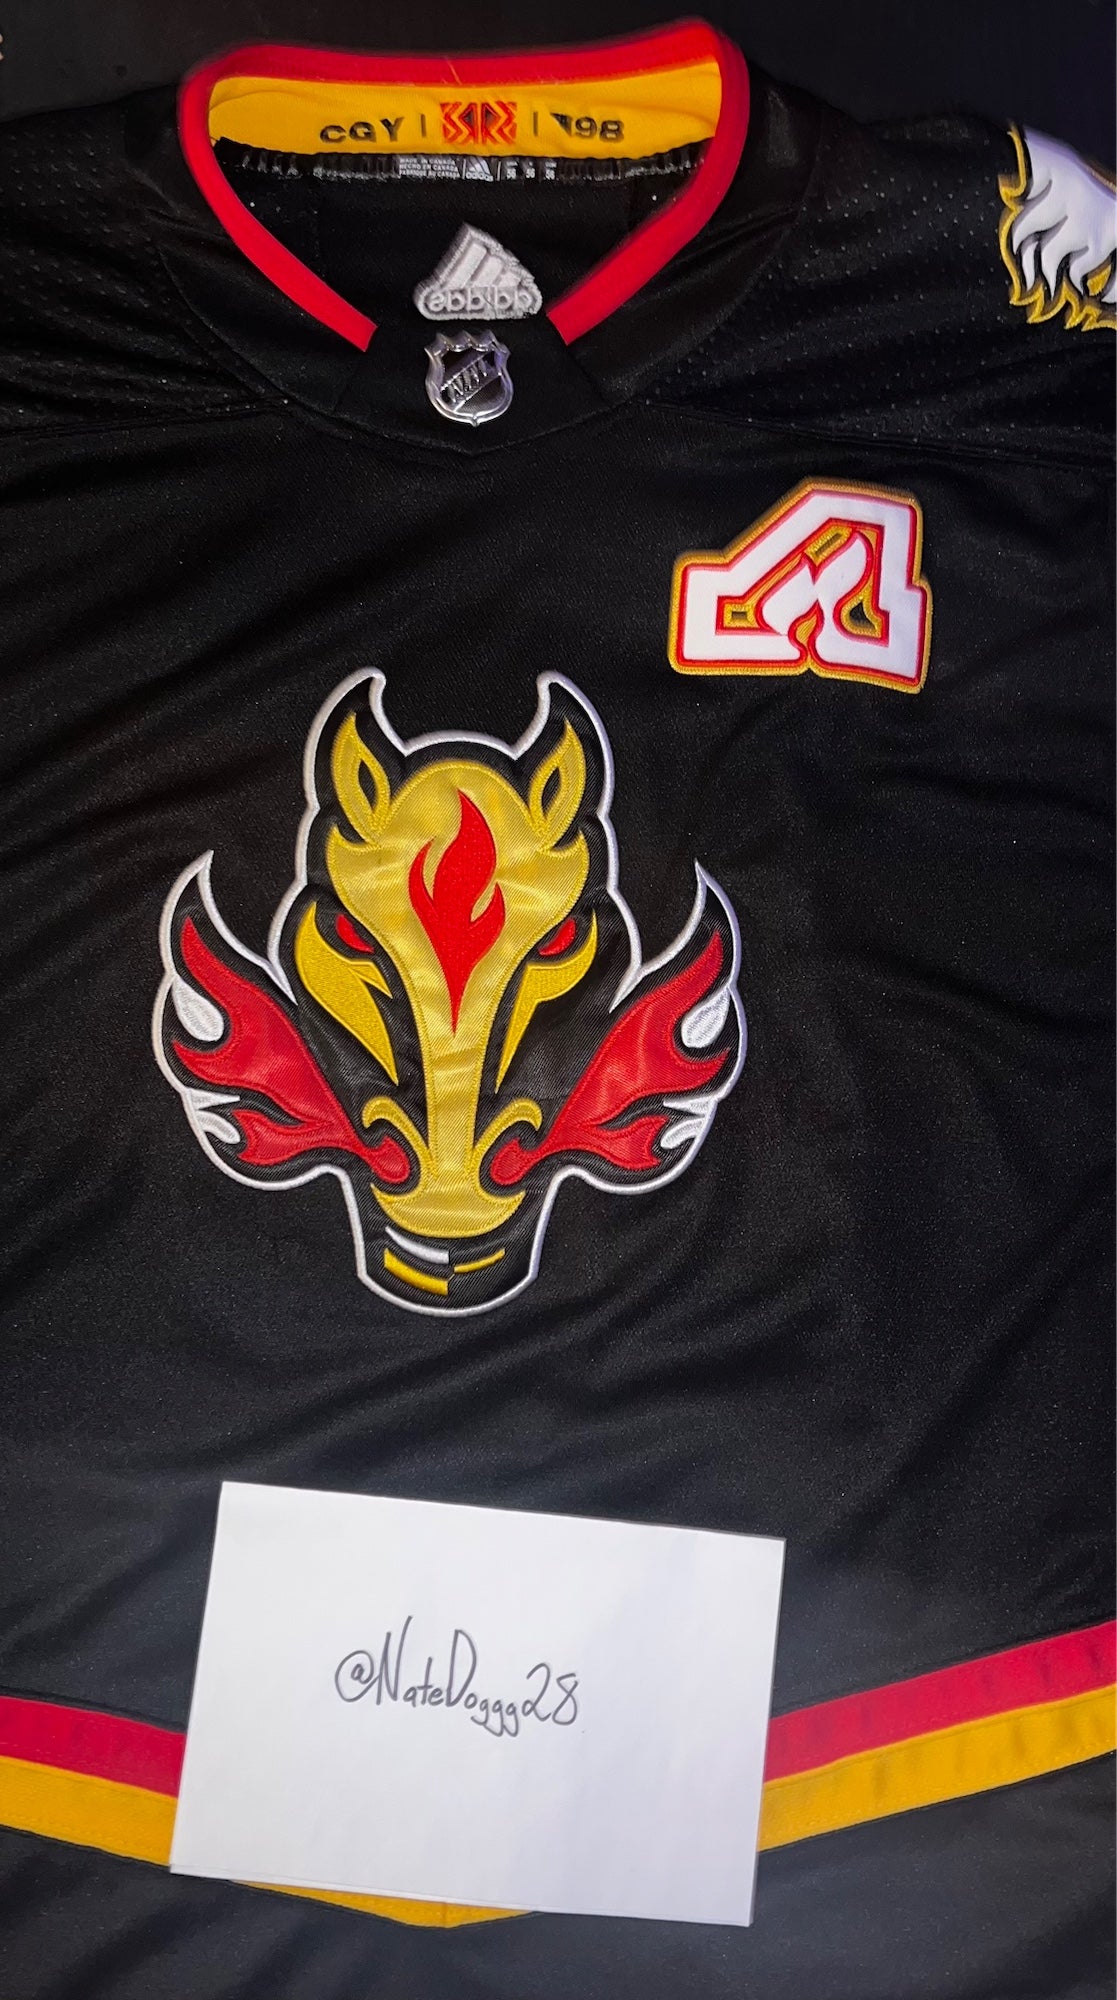 Matthew Tkachuk Calgary Flames adidas Home Authentic Pro Player - Jersey -  Red